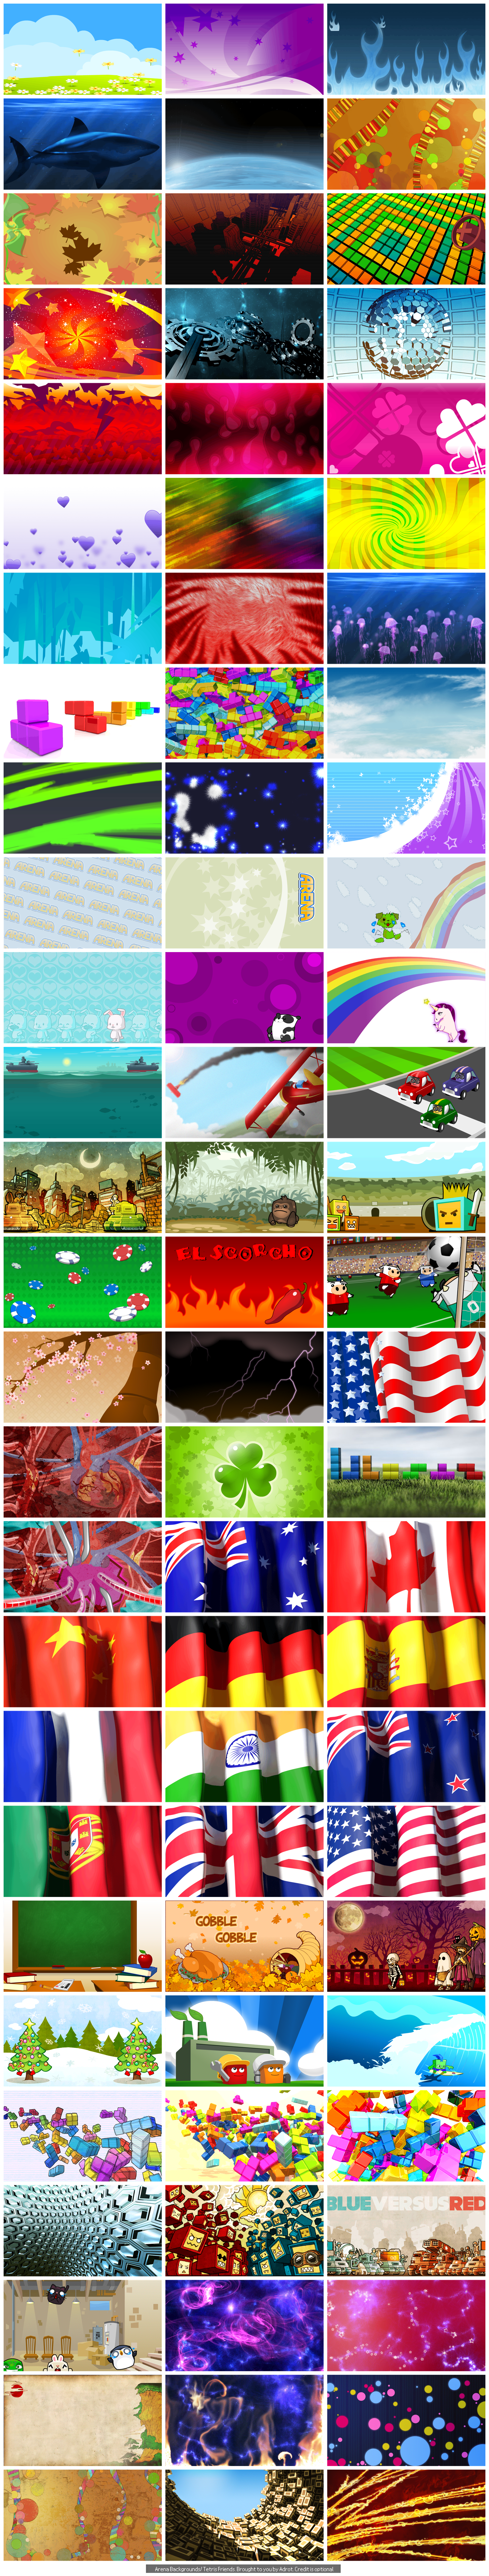 Tetris Friends - Arena Backgrounds